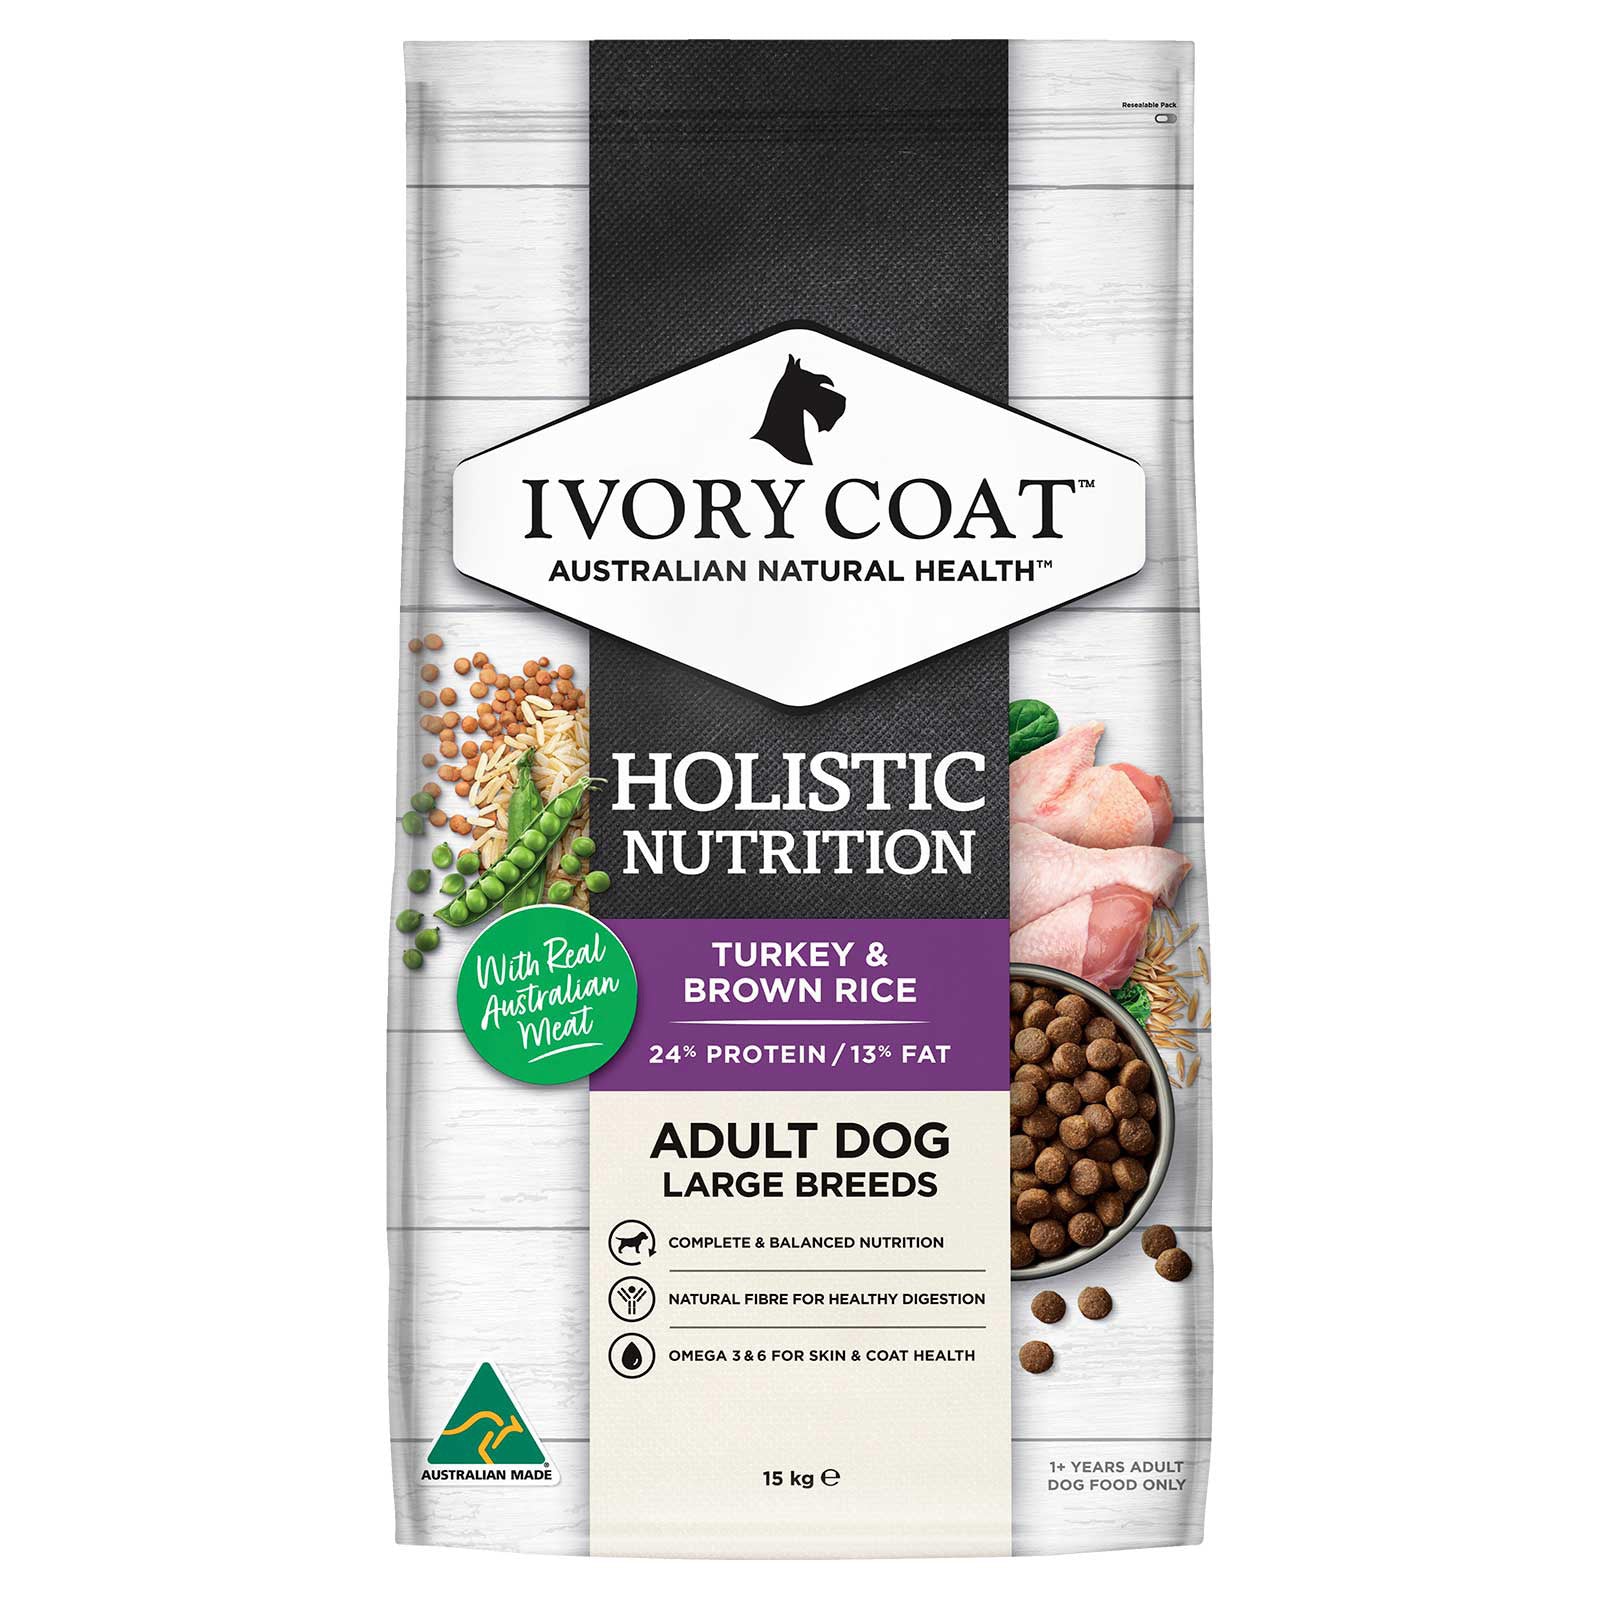 Ivory Coat Dog Food Adult Large Breed Turkey & Brown Rice